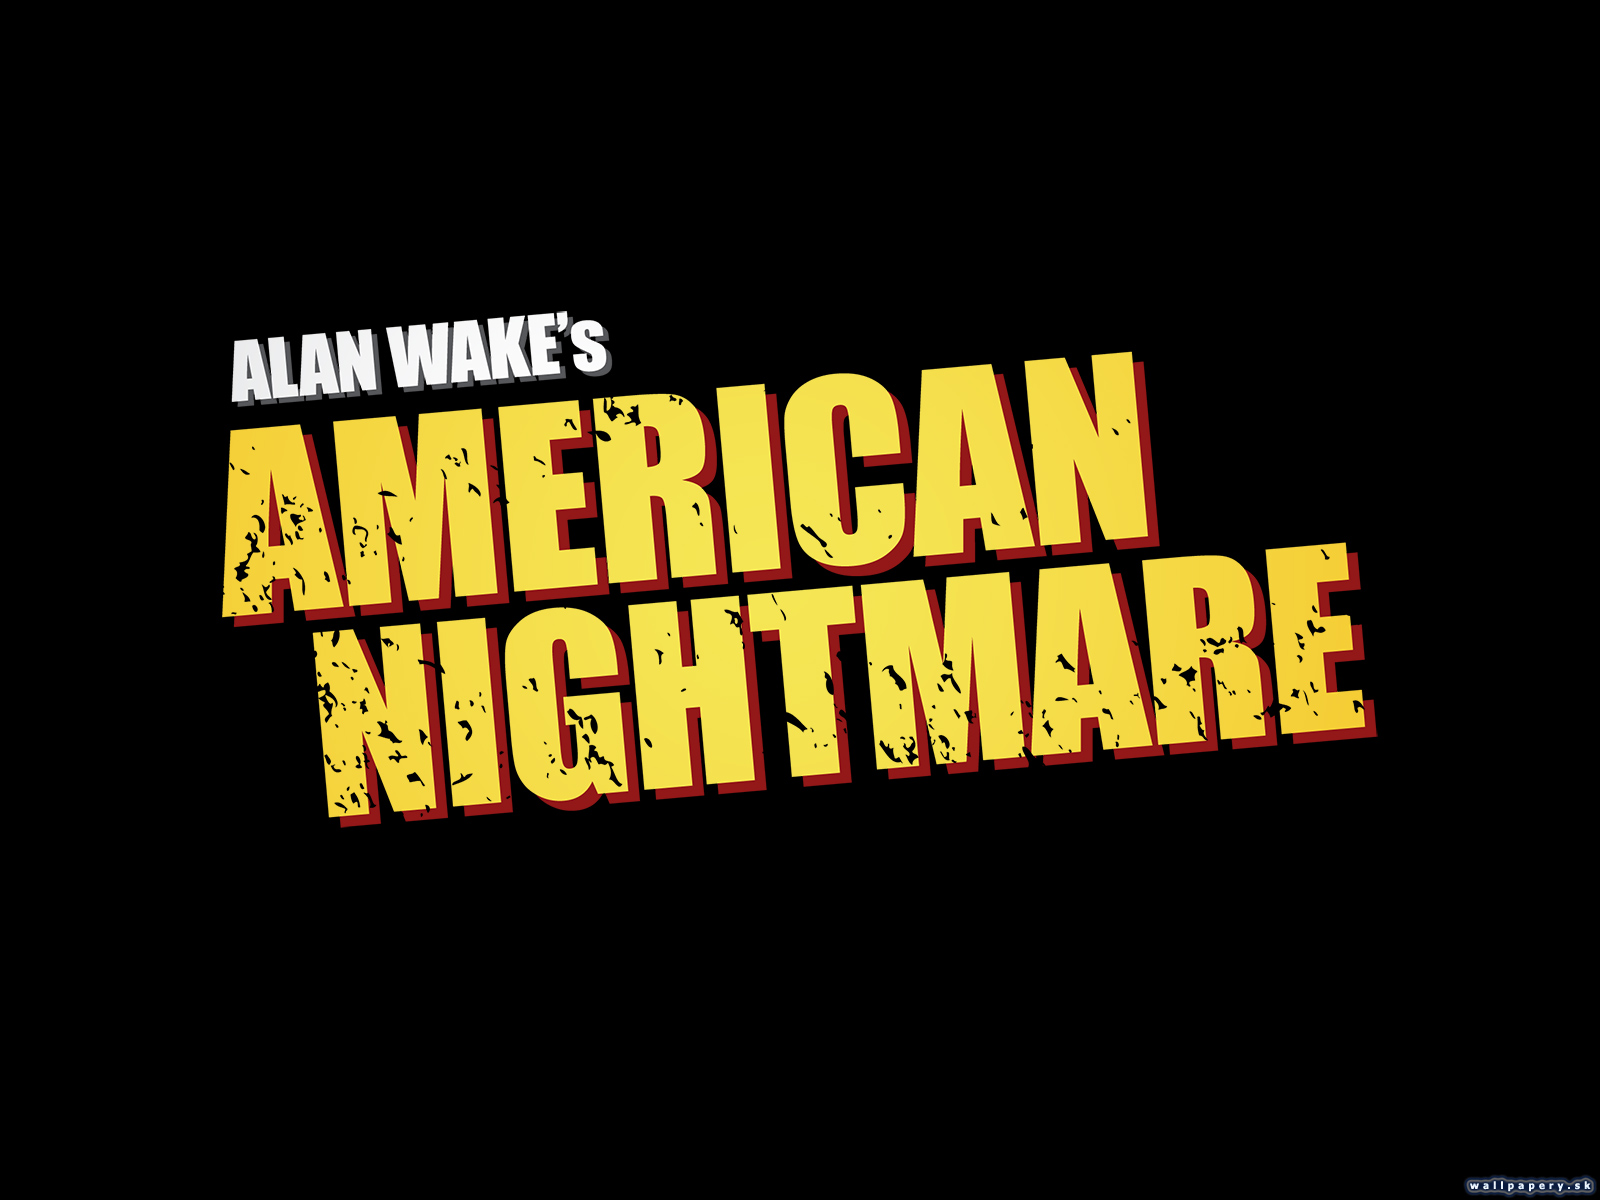 Alan Wake's American Nightmare - wallpaper 2